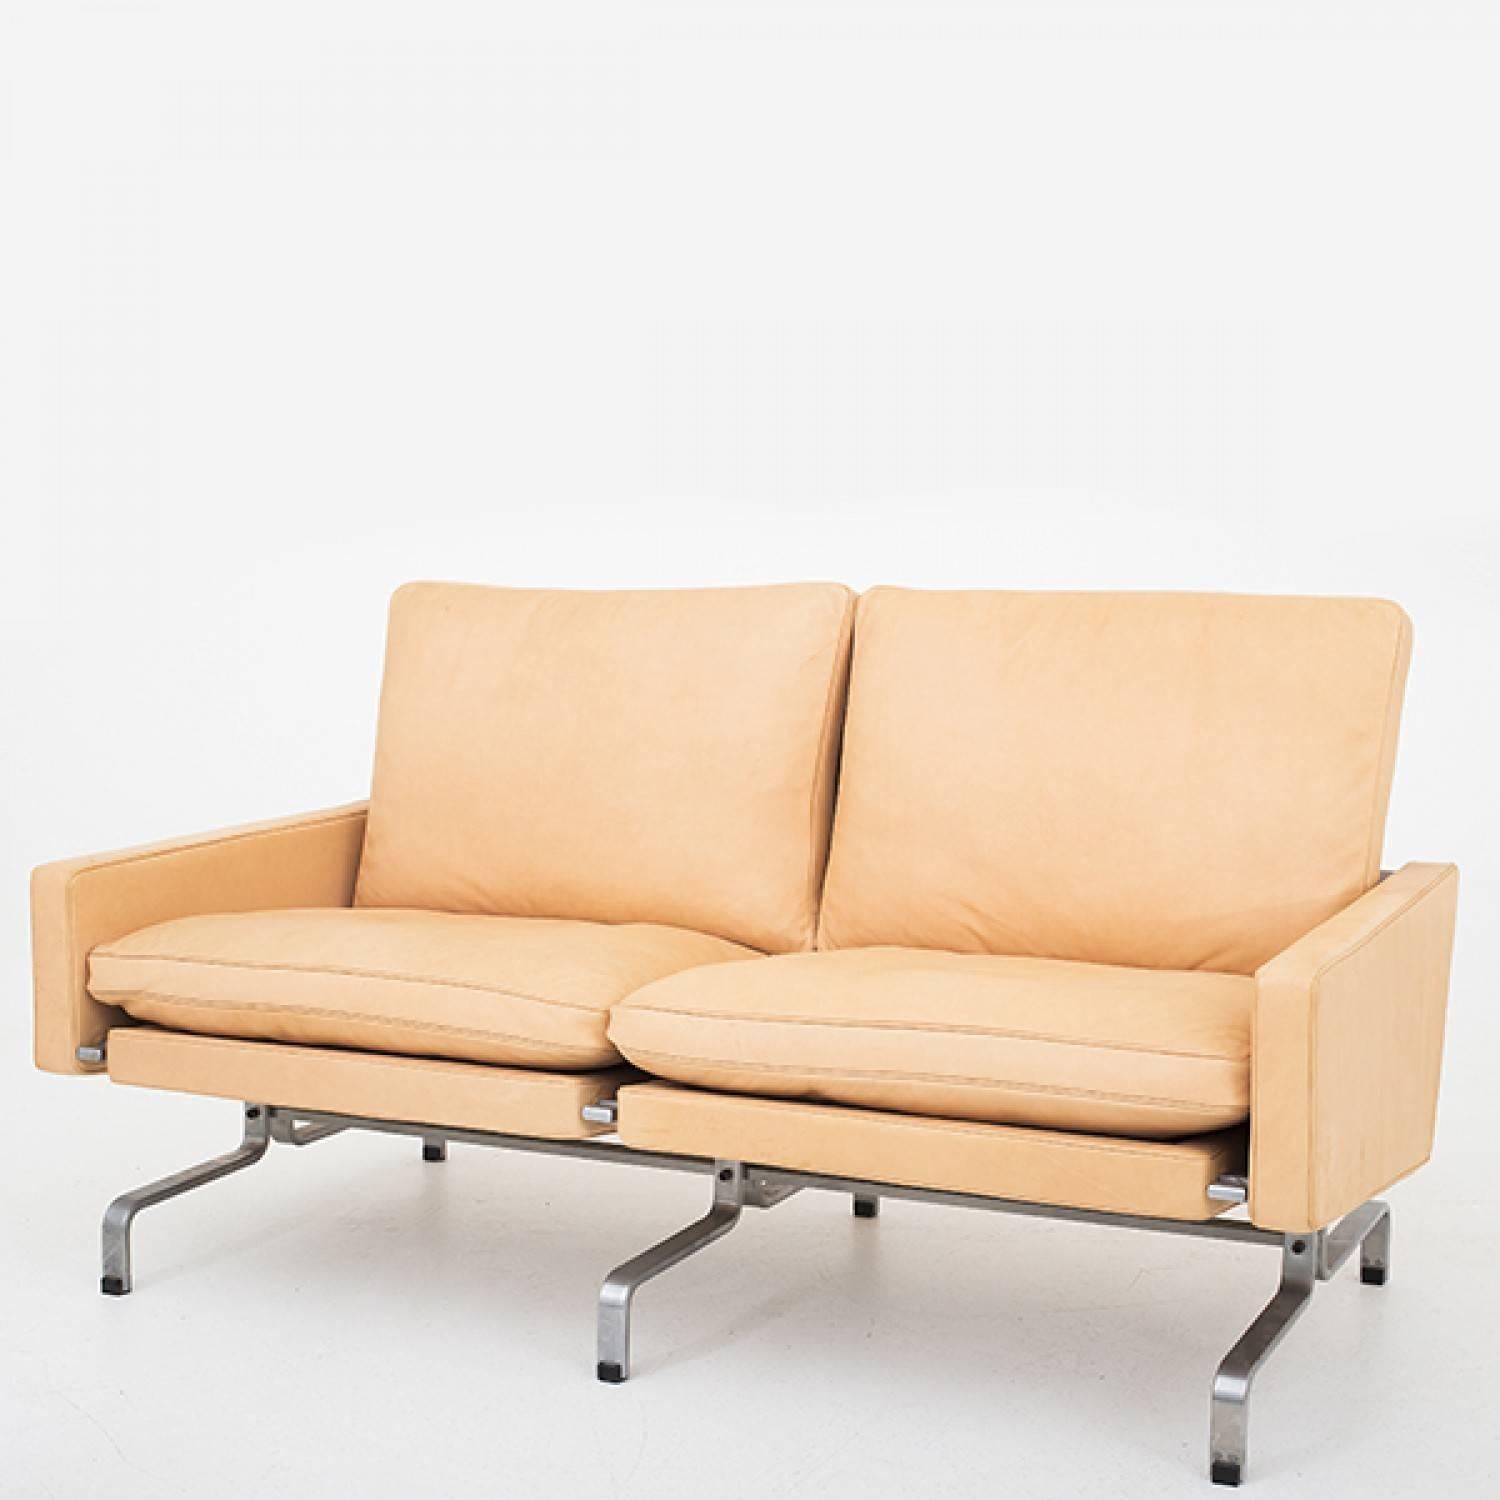 PK 31/2. Two-seat sofa in natural leather. Design by Poul Kjærholm. Maker E. Kold Christensen.